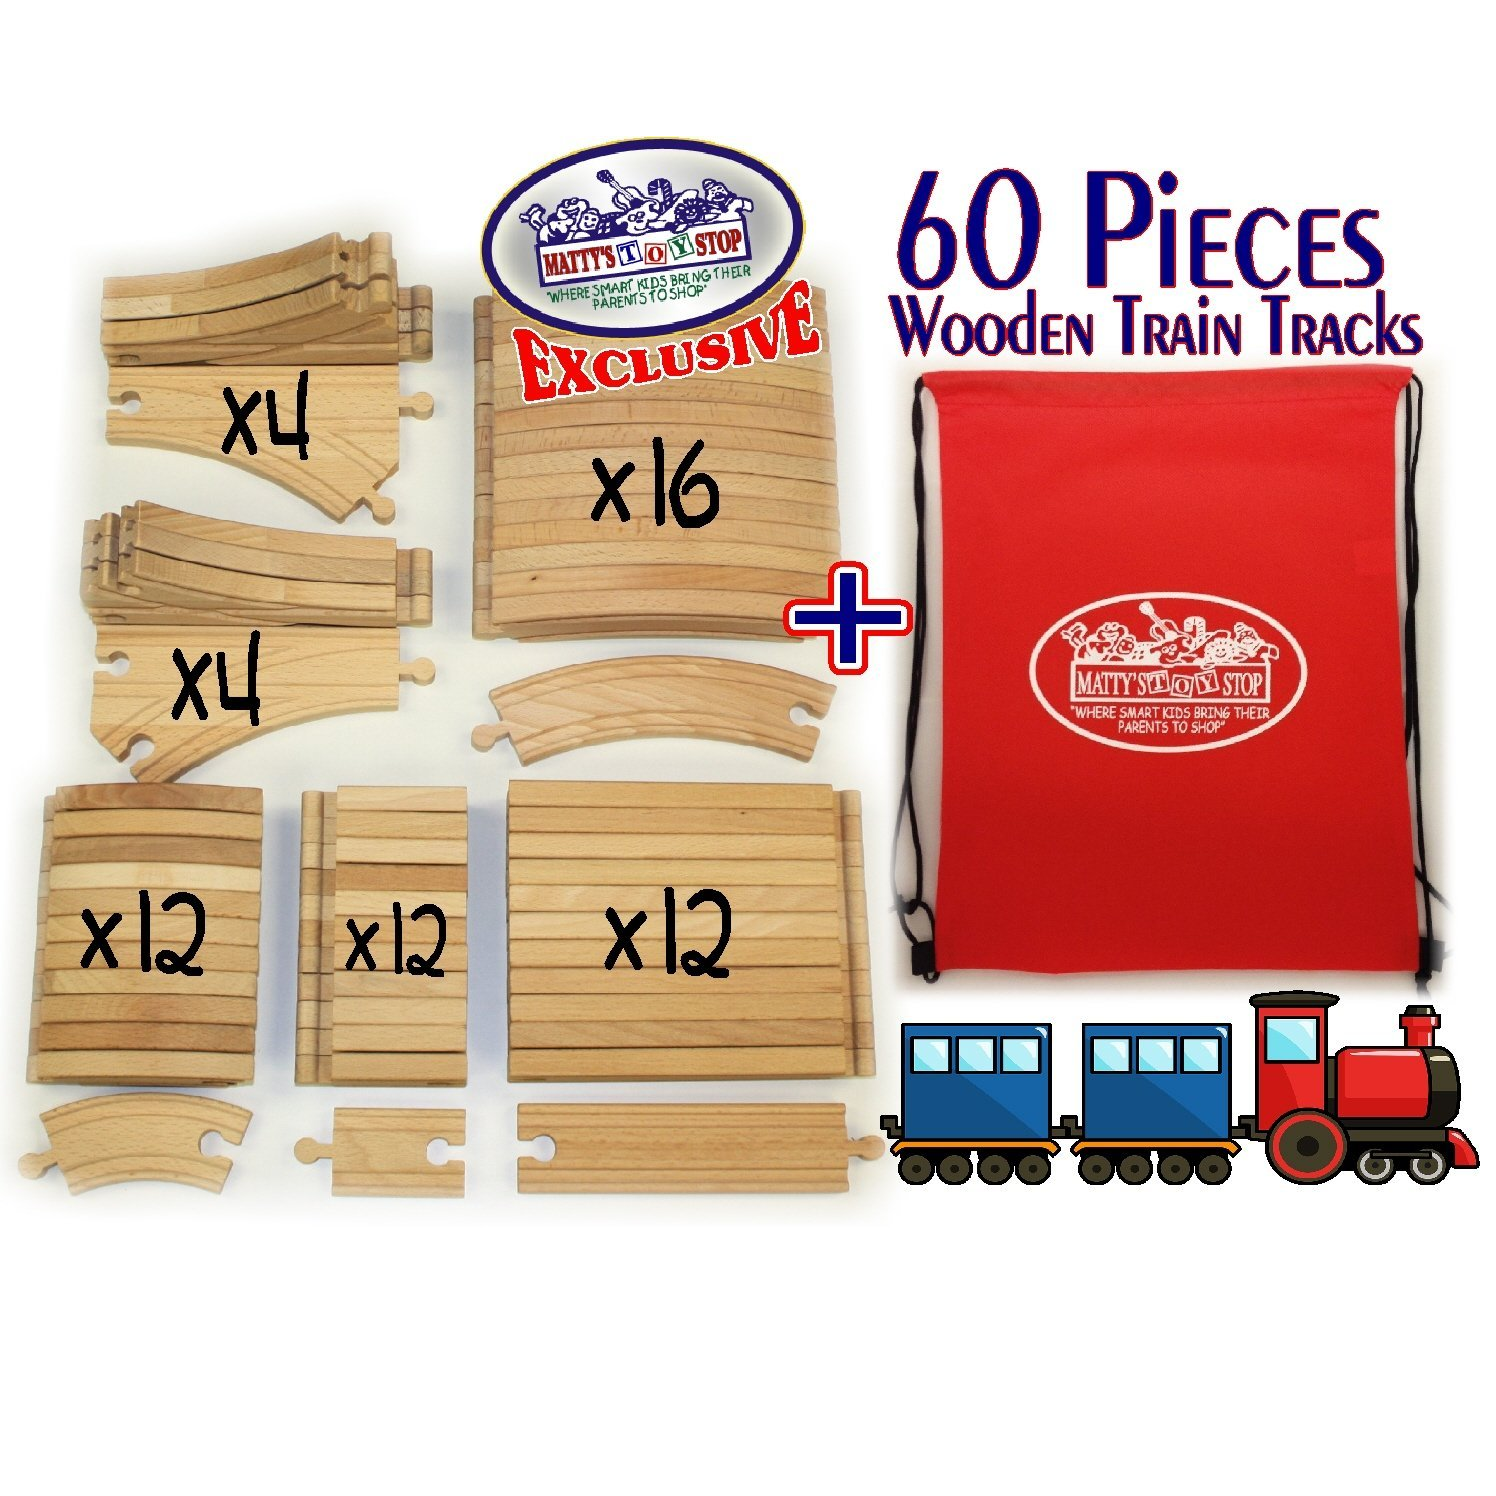 Lightening Deal! Deluxe Wooden Train Track 60 Piece Set Only $18.36!